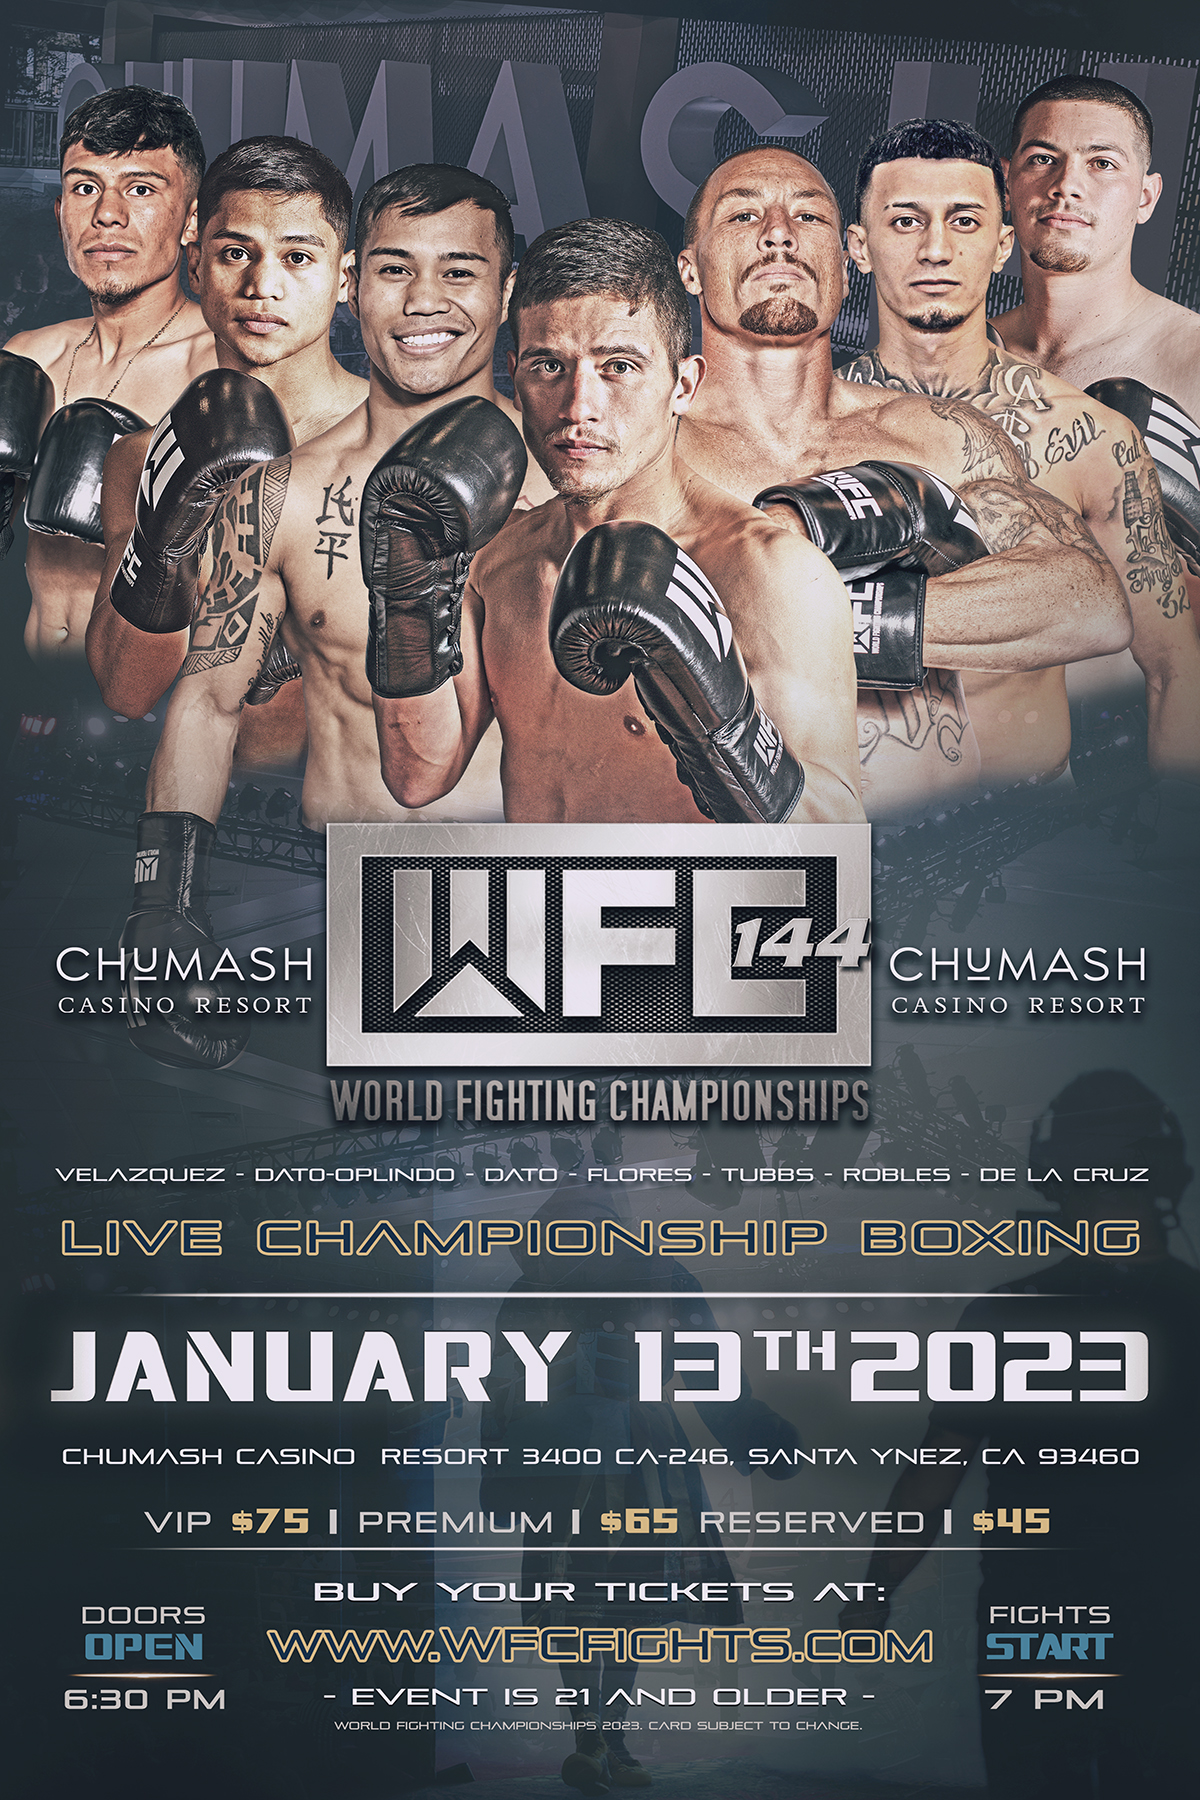 WFC 144 LIVE BOXING January 13th, 2023 at Chumash Casino World